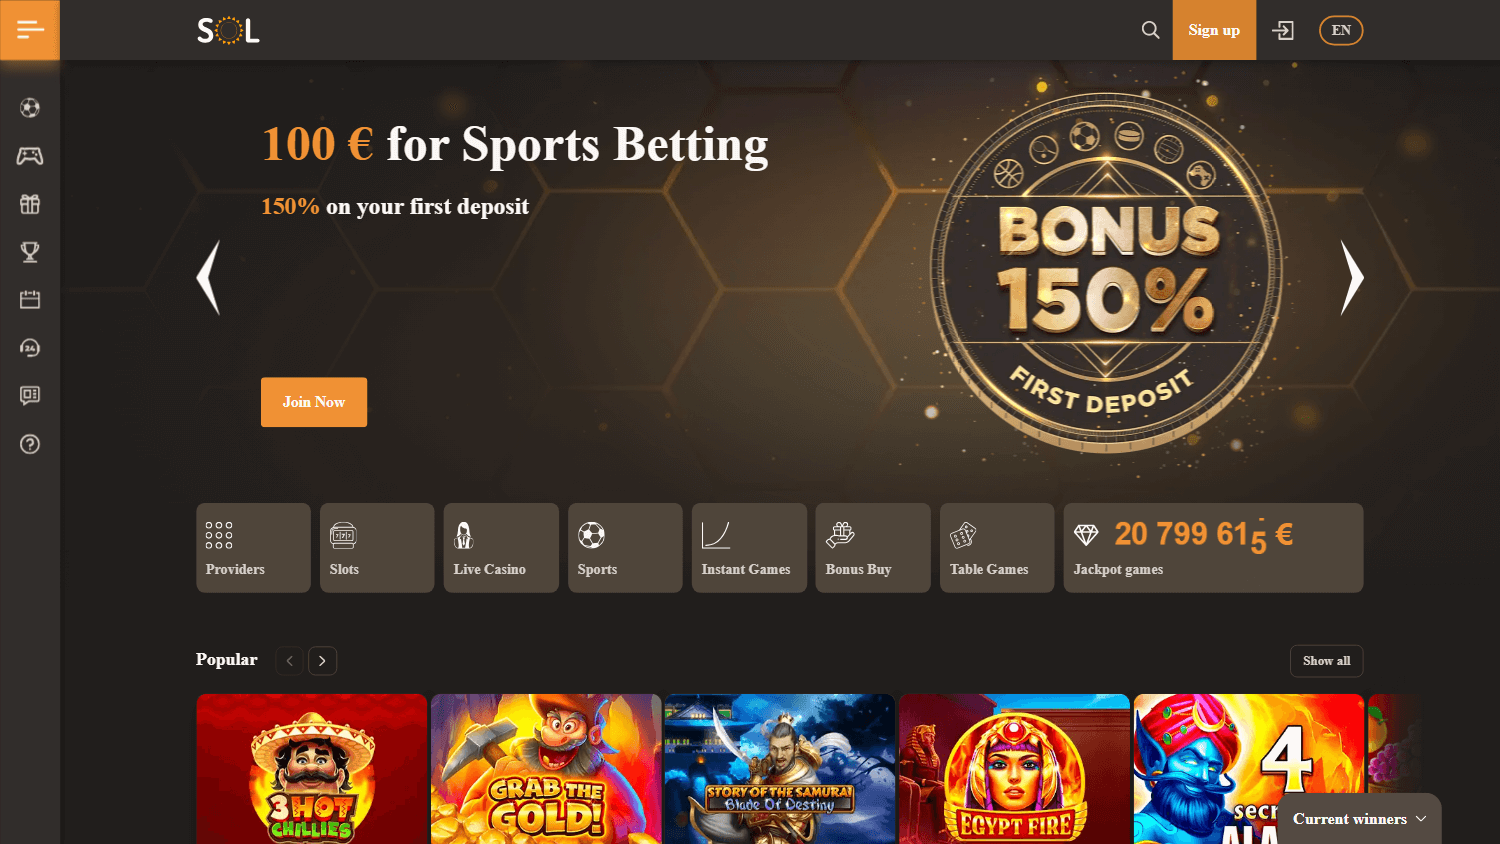 sol_casino_homepage_desktop